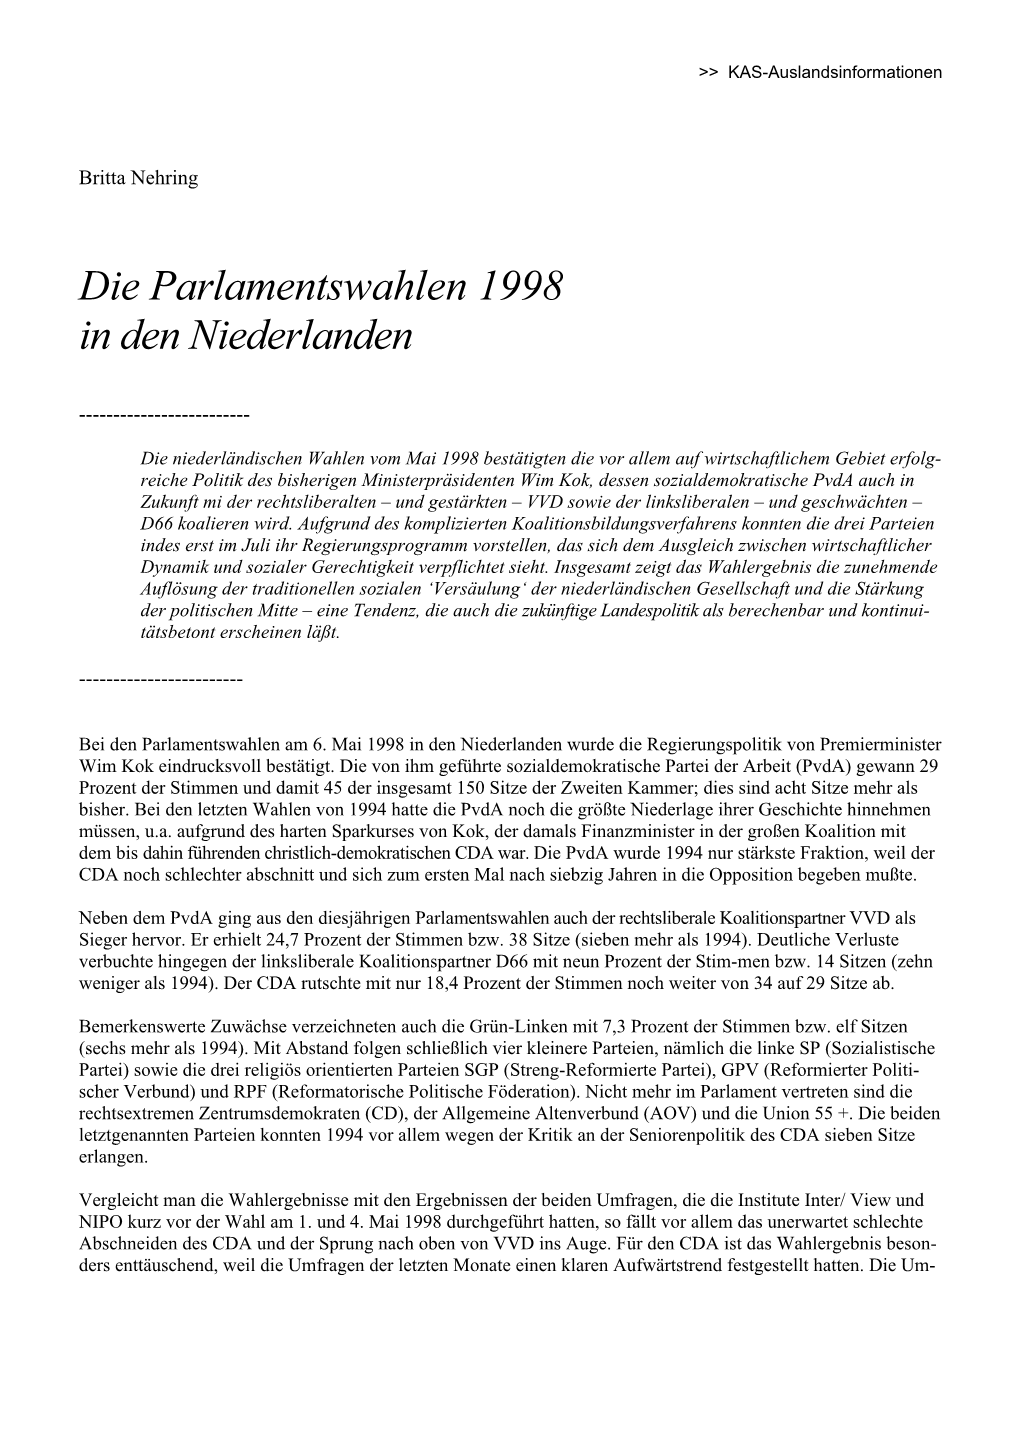 Die Parlamentswahlen 1998 in Den Niederlanden